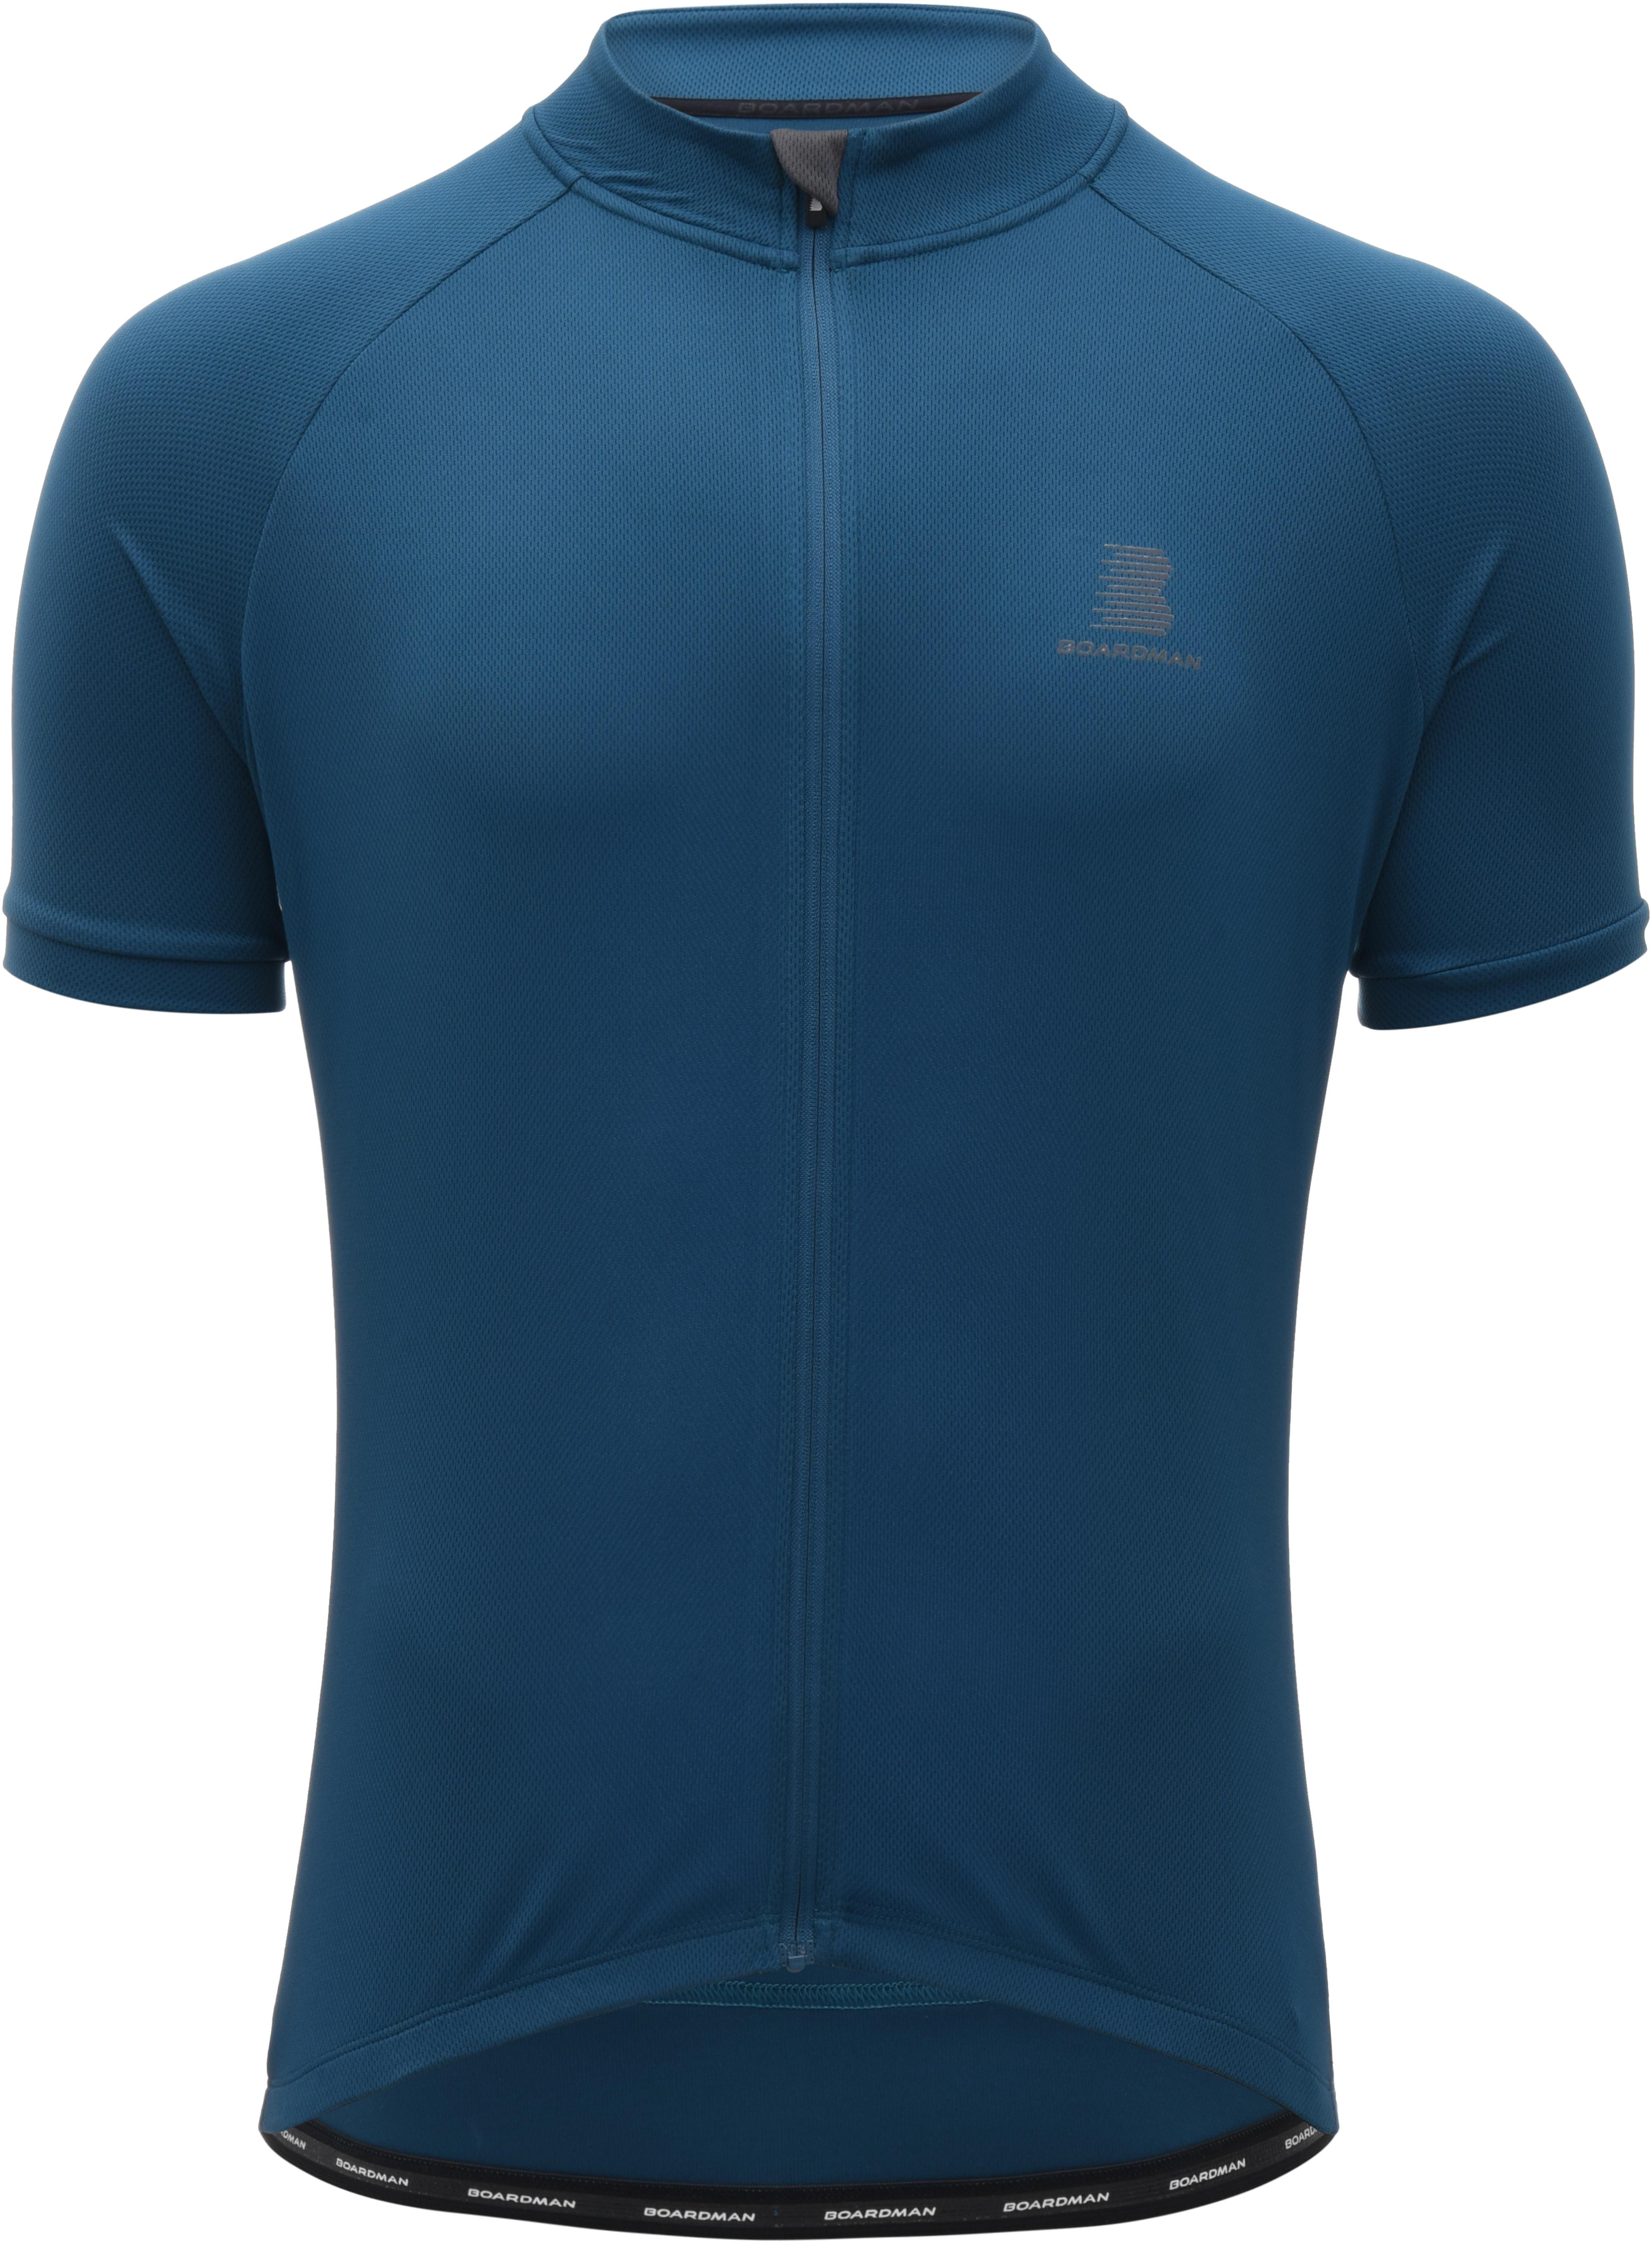 Boardman Mens Cycling Jersey - Blue Medium